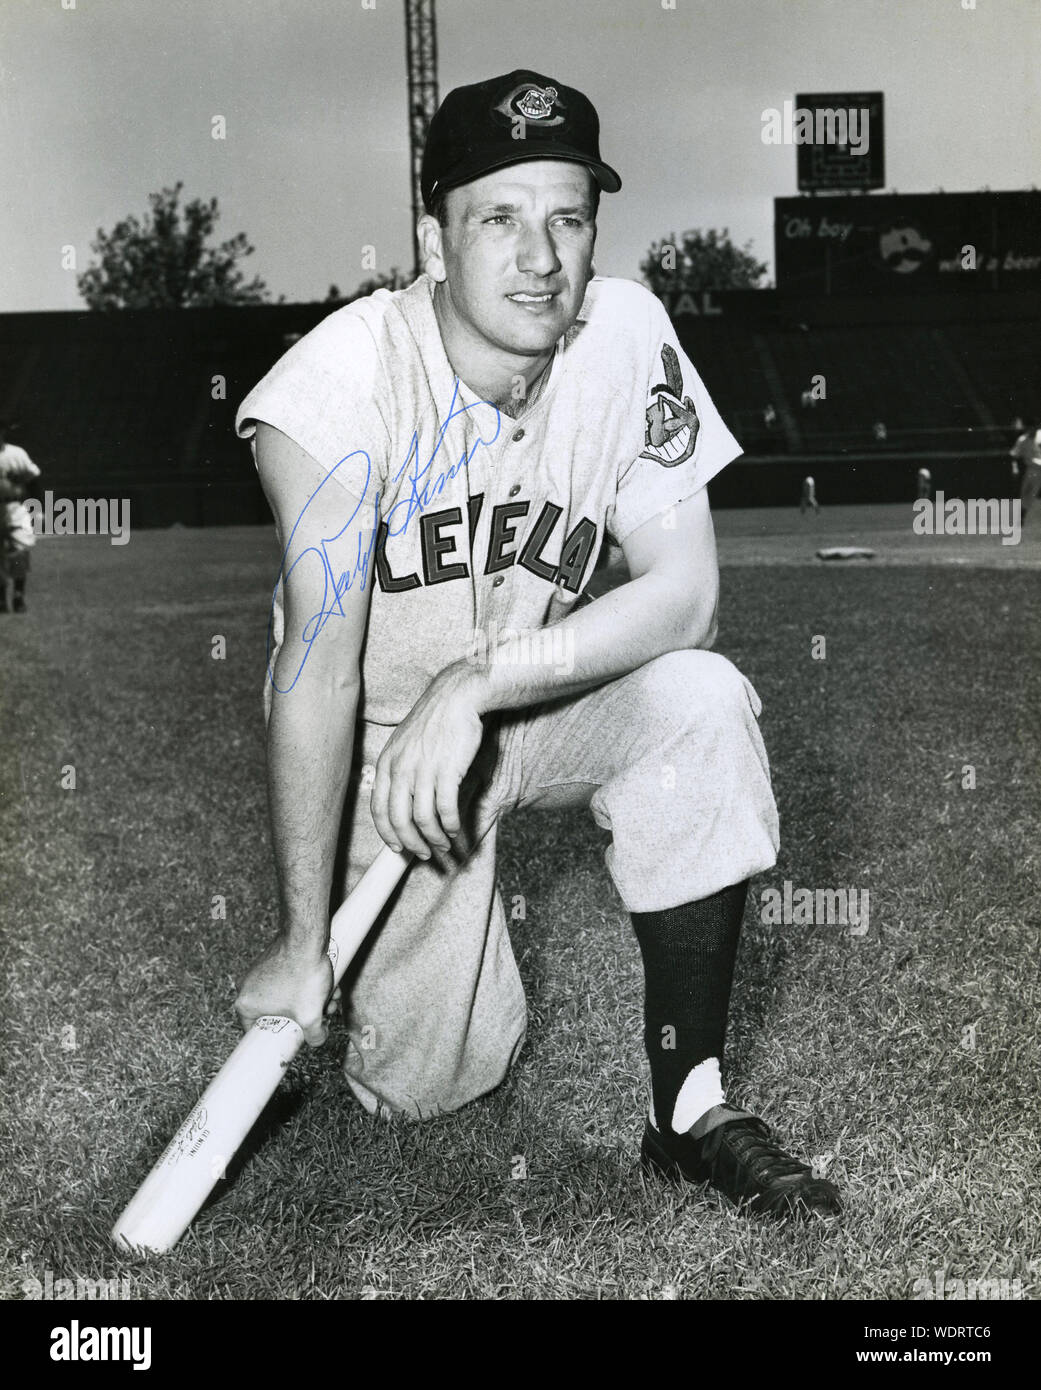 Autographiertes Foto der Hall of Fame Baseball spieler Ralph kiner dargestellt mit den Cleveland Indians. Stockfoto